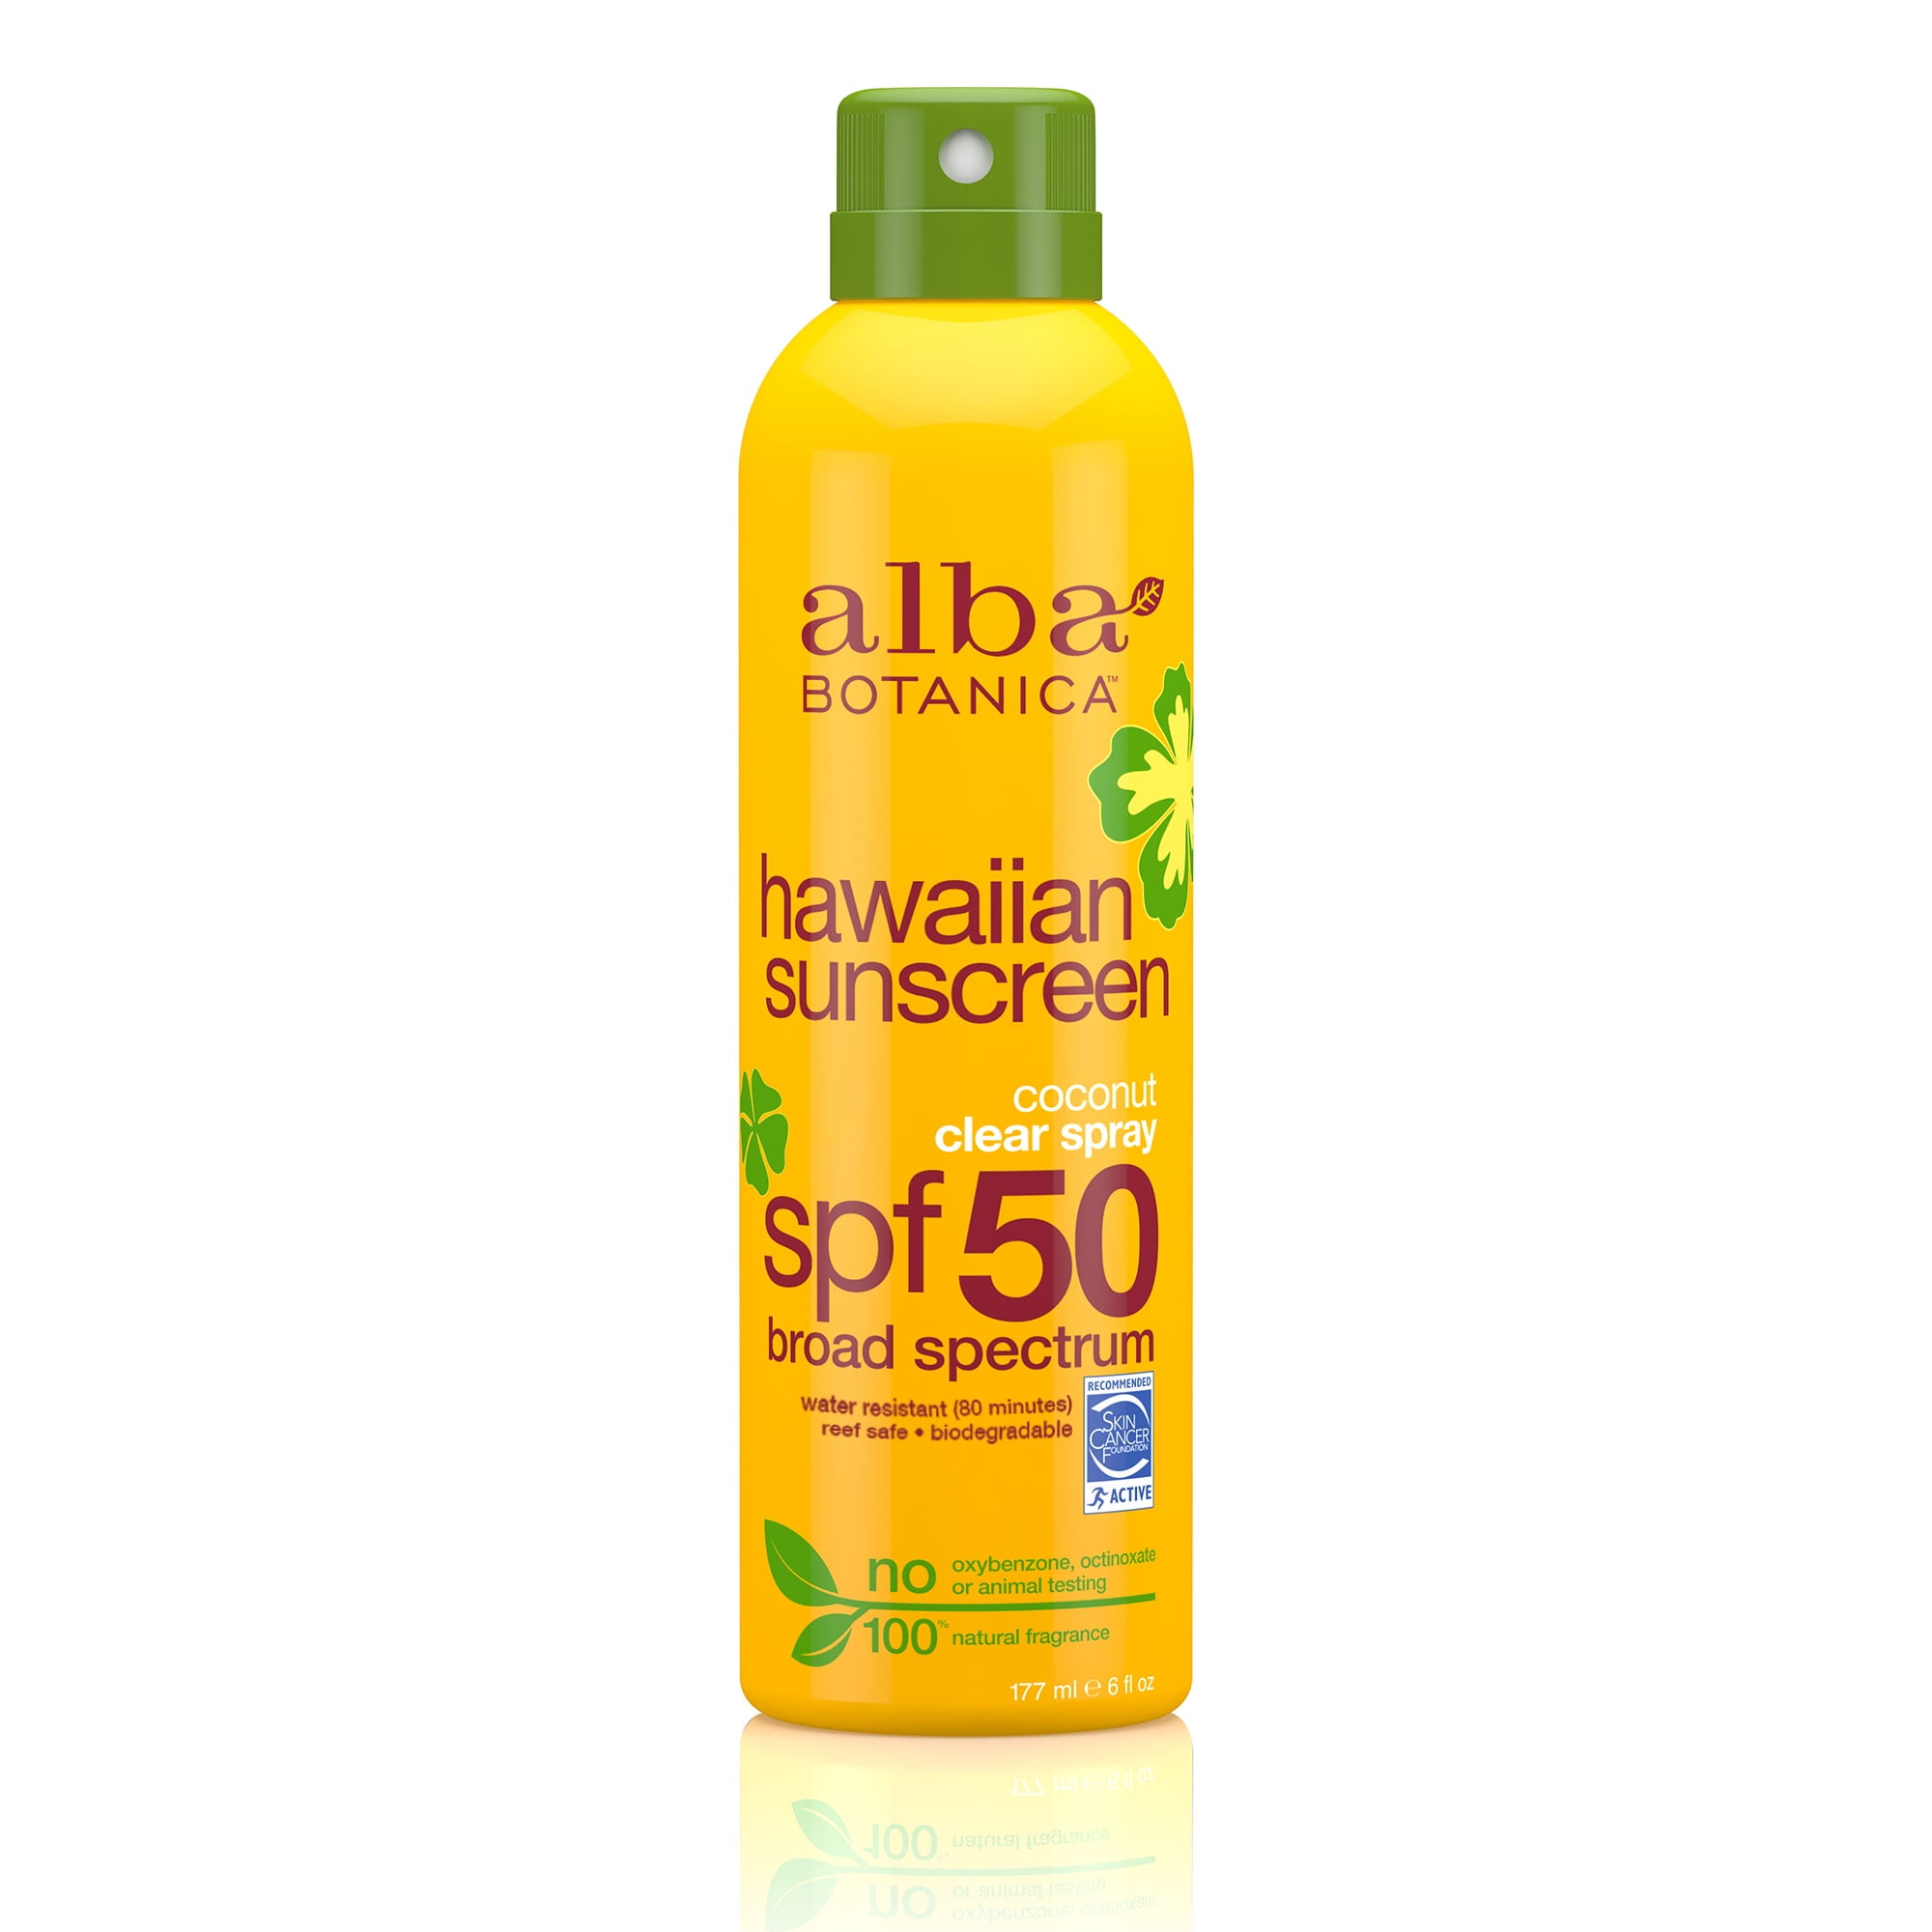 alba botanica hawaiian sunscreen spf 50 reviews